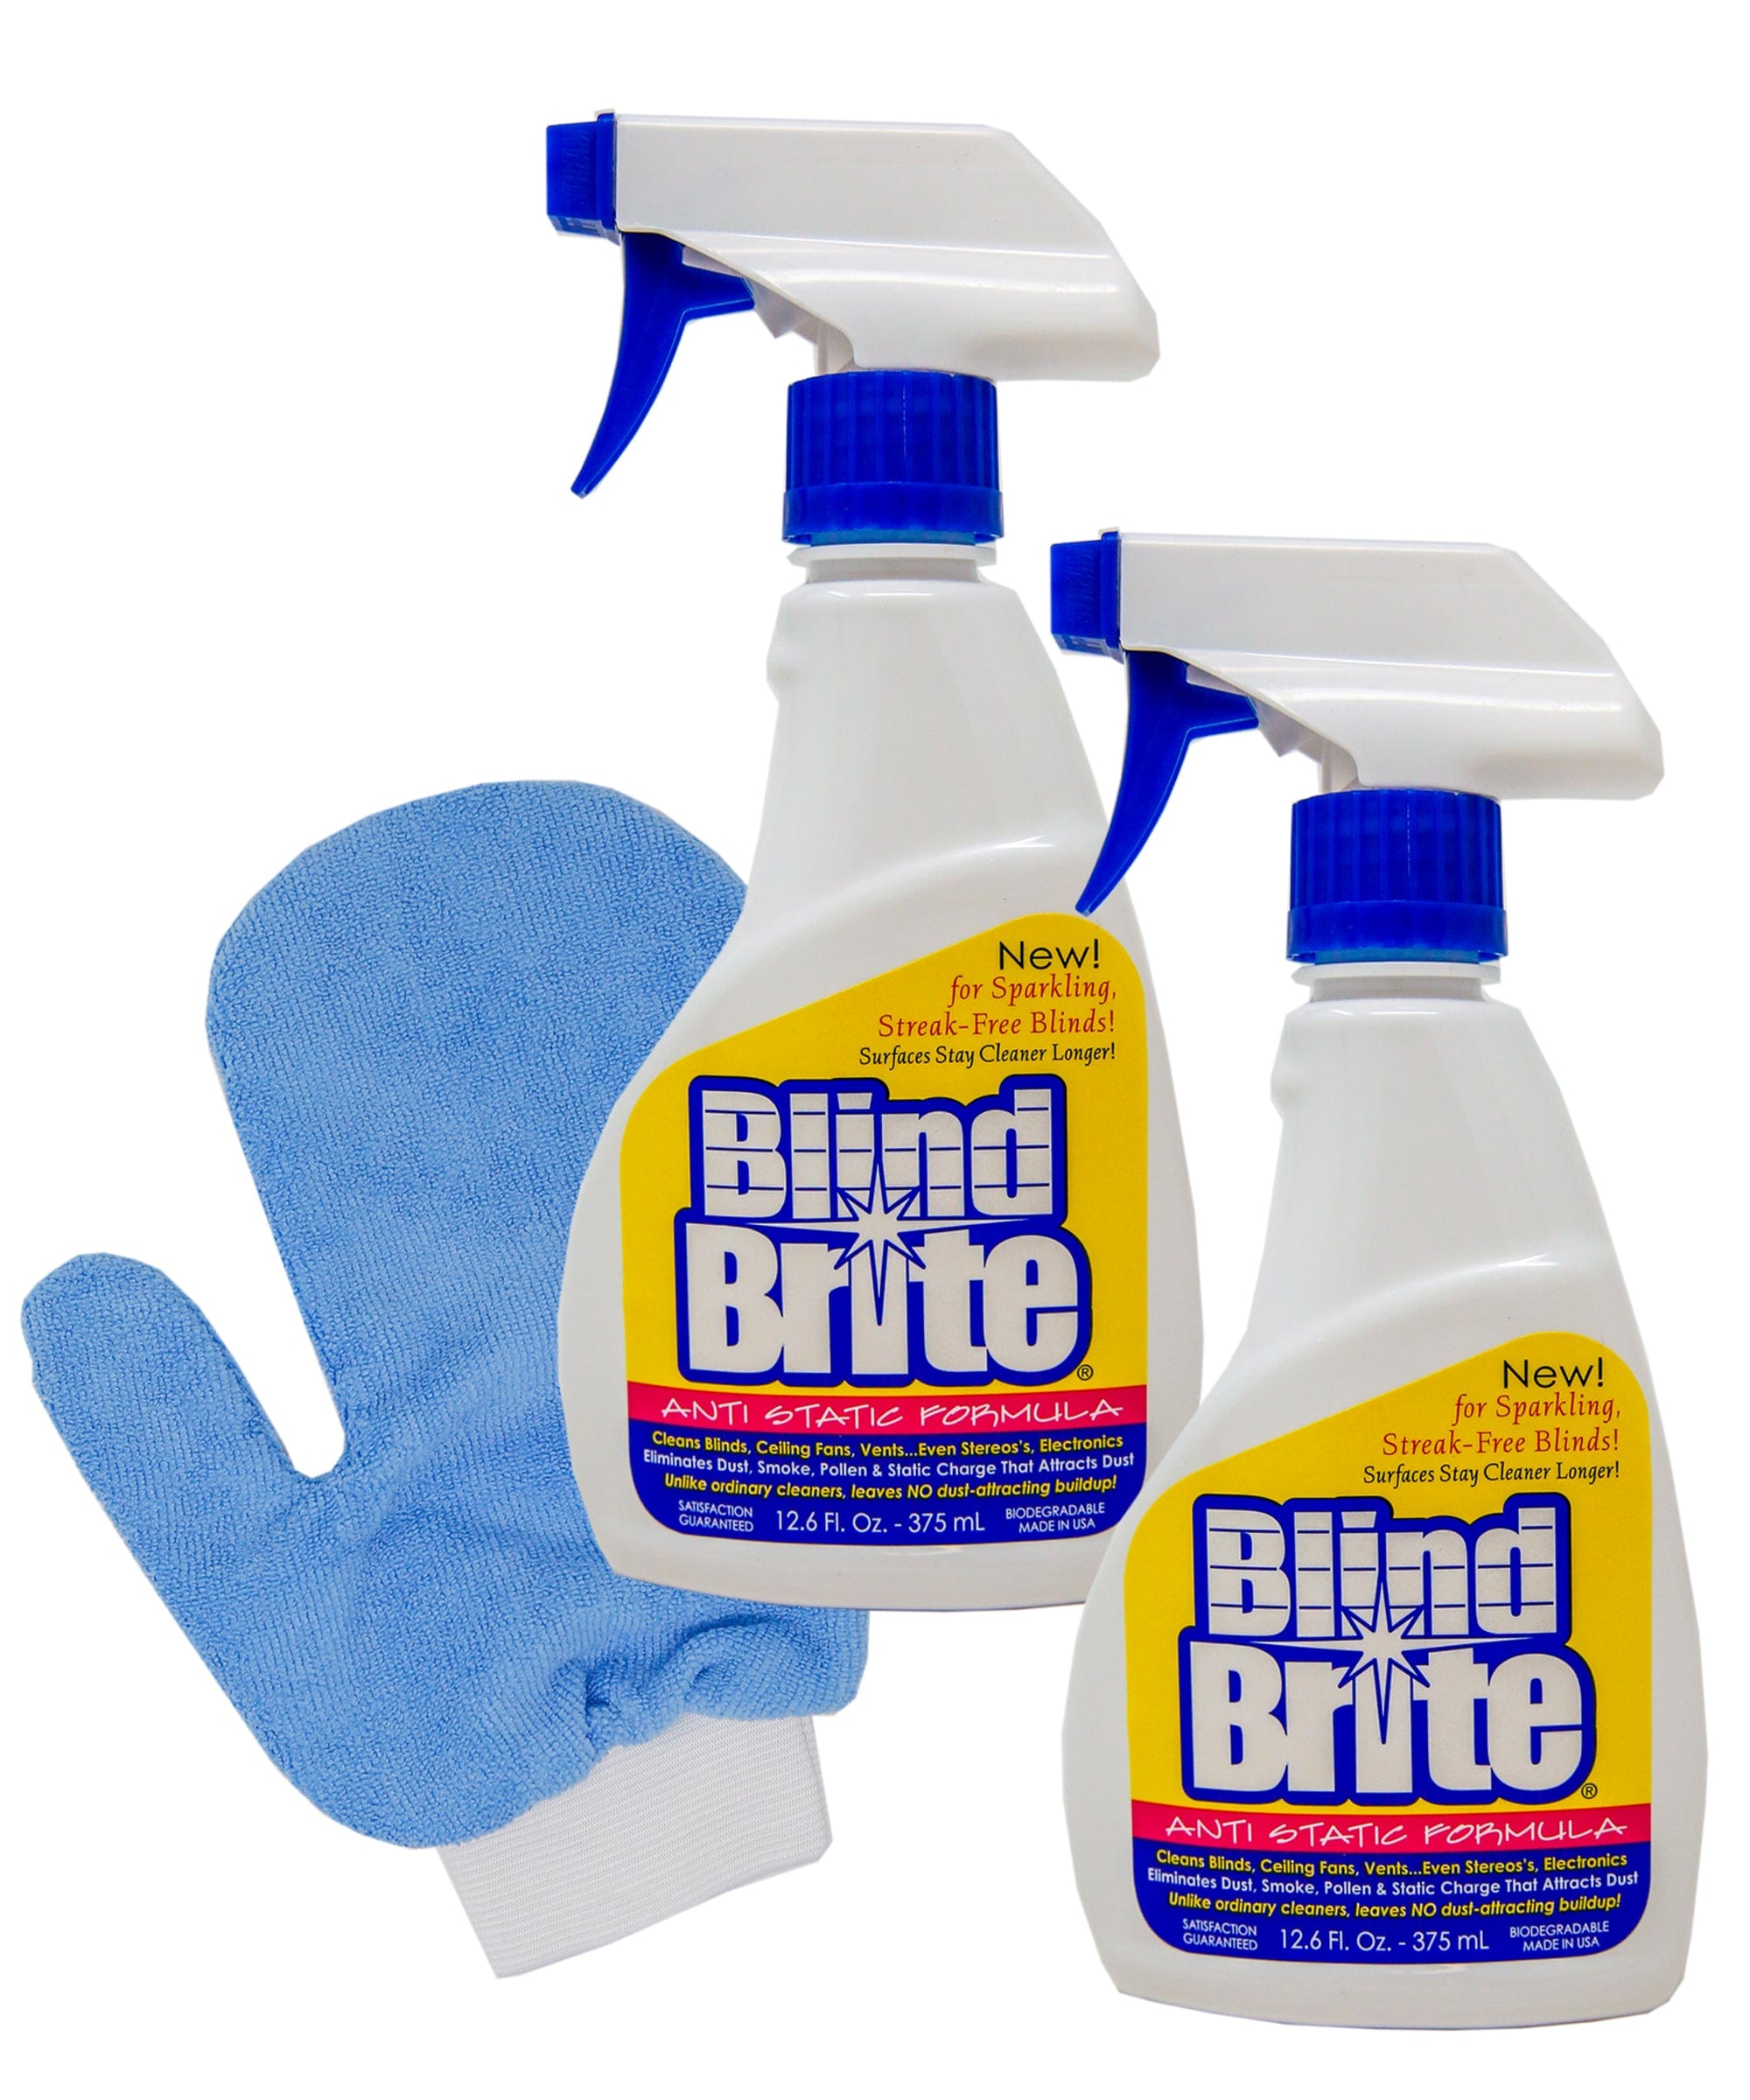 Blind Brite- Blind Cleaning Kit